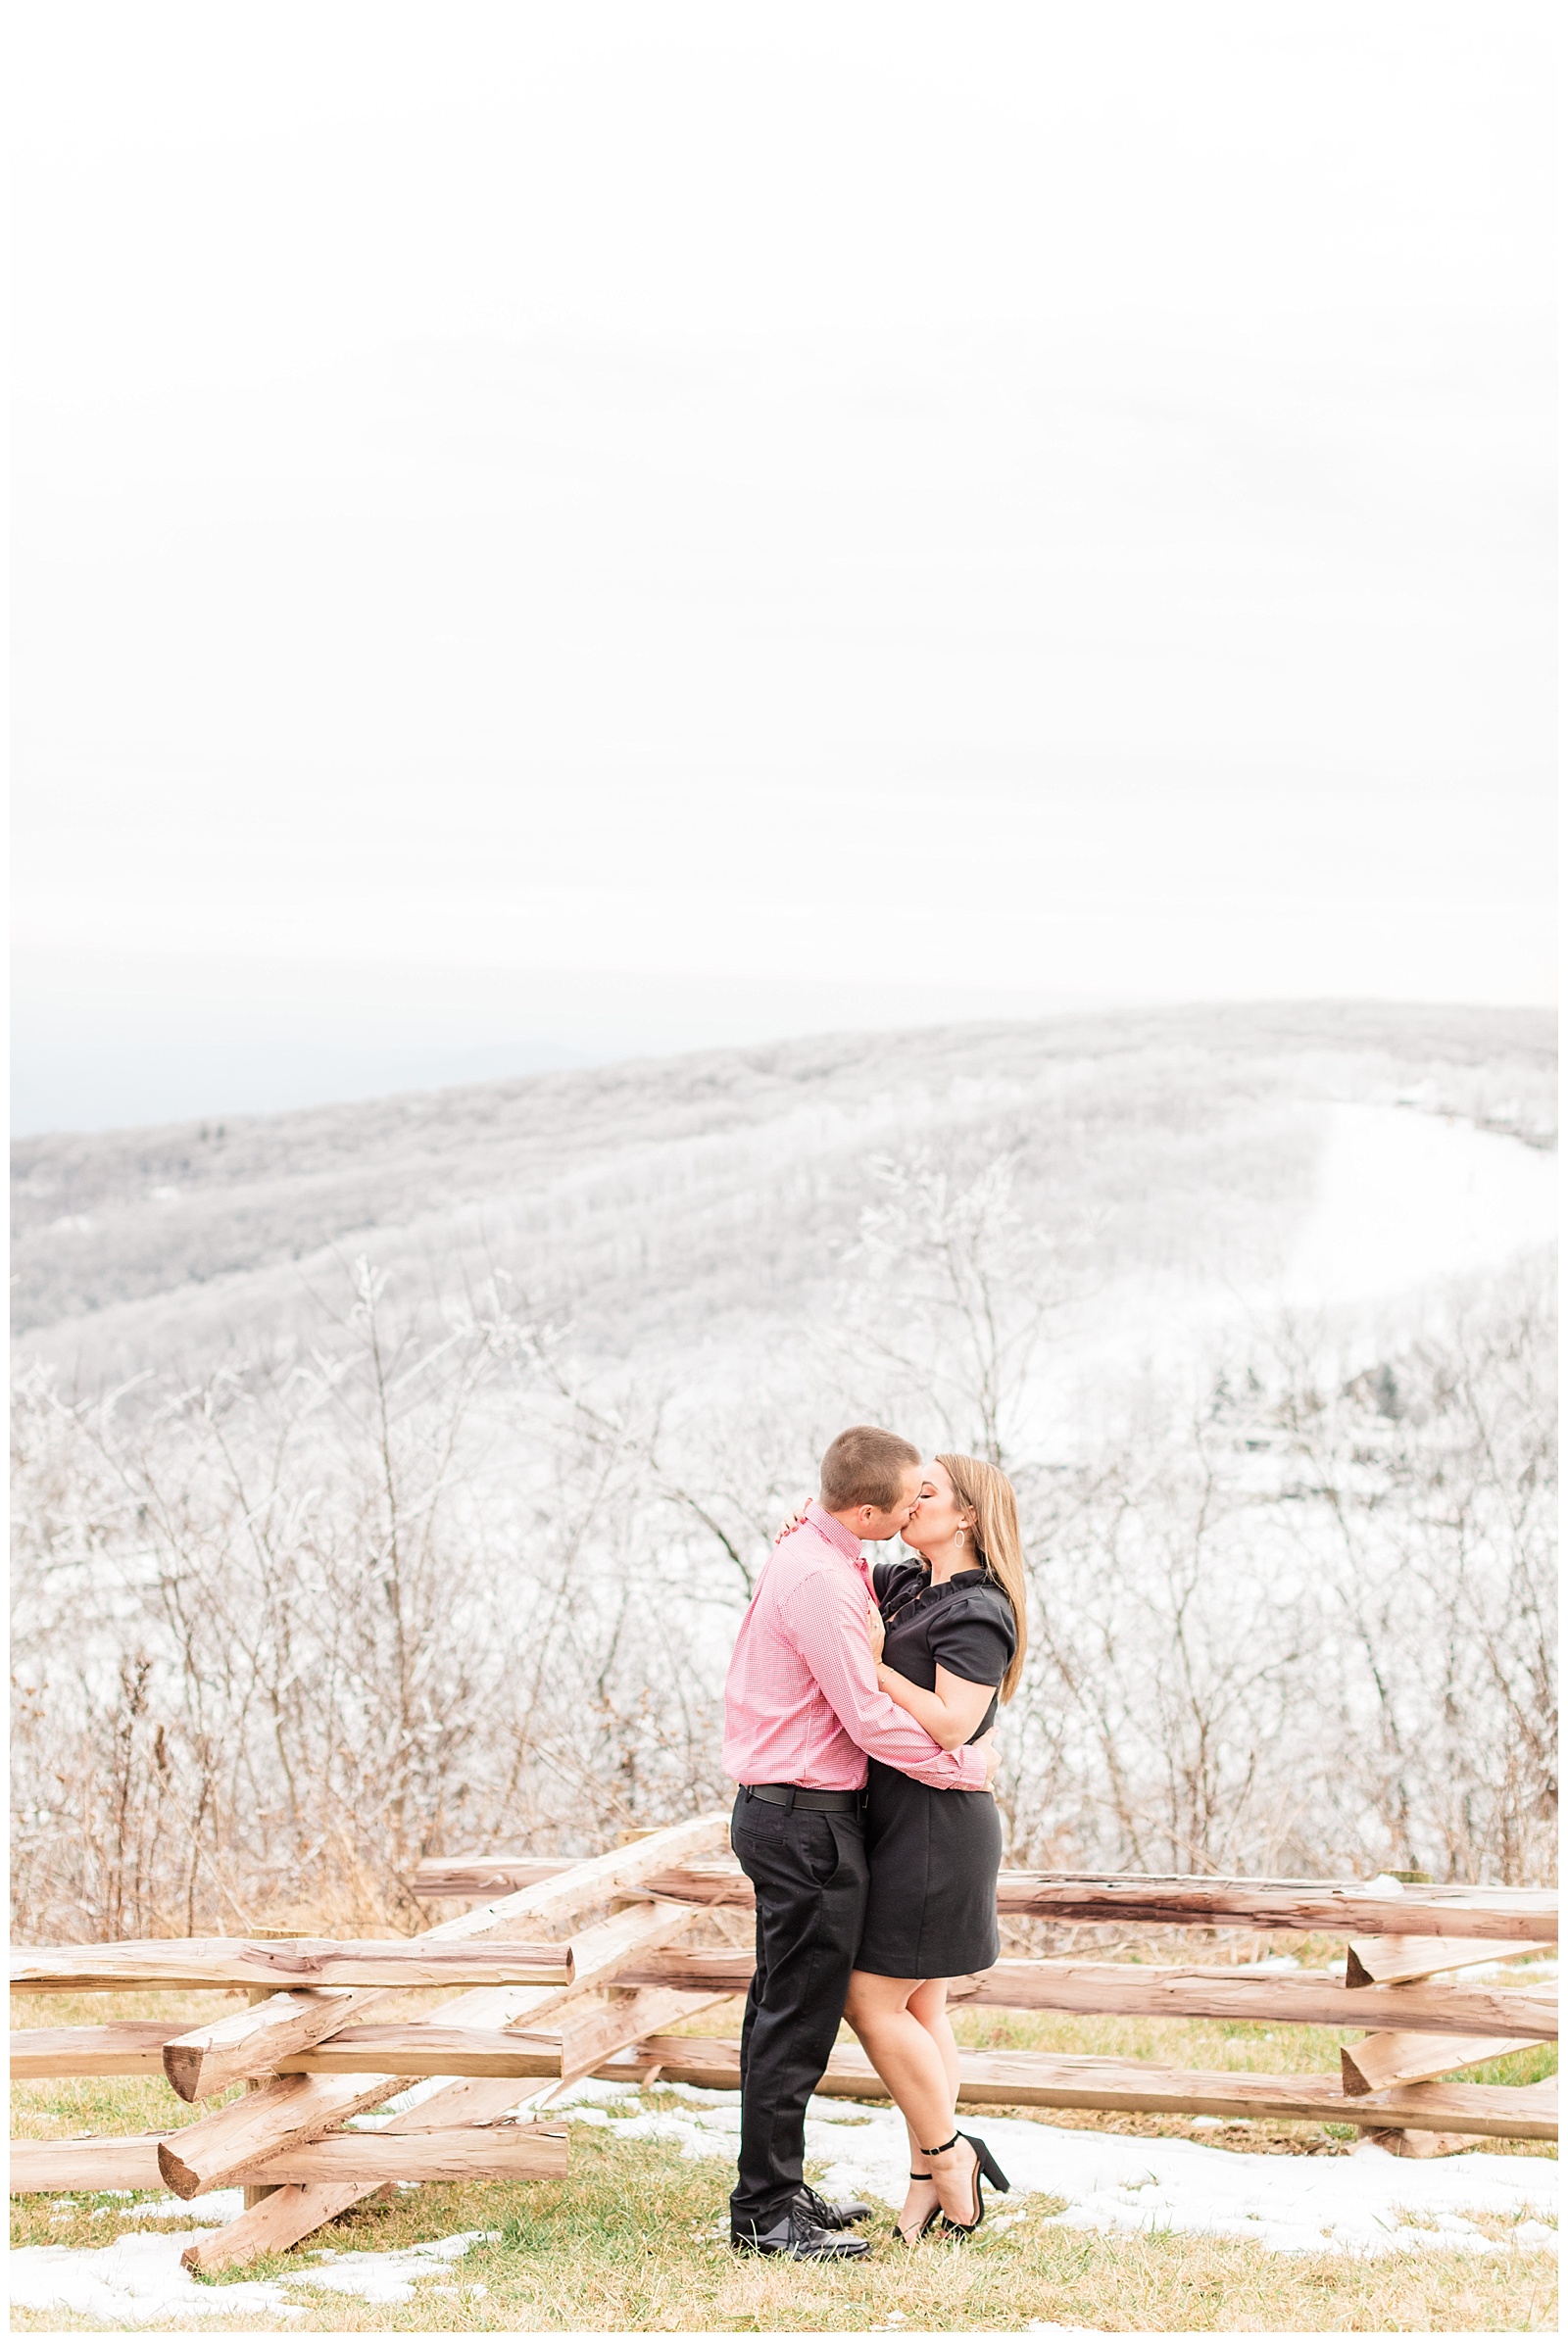 A Snowy Wintergreen Proposal | Sean and Lindsey | Virginia Wedding Photographer26.jpg